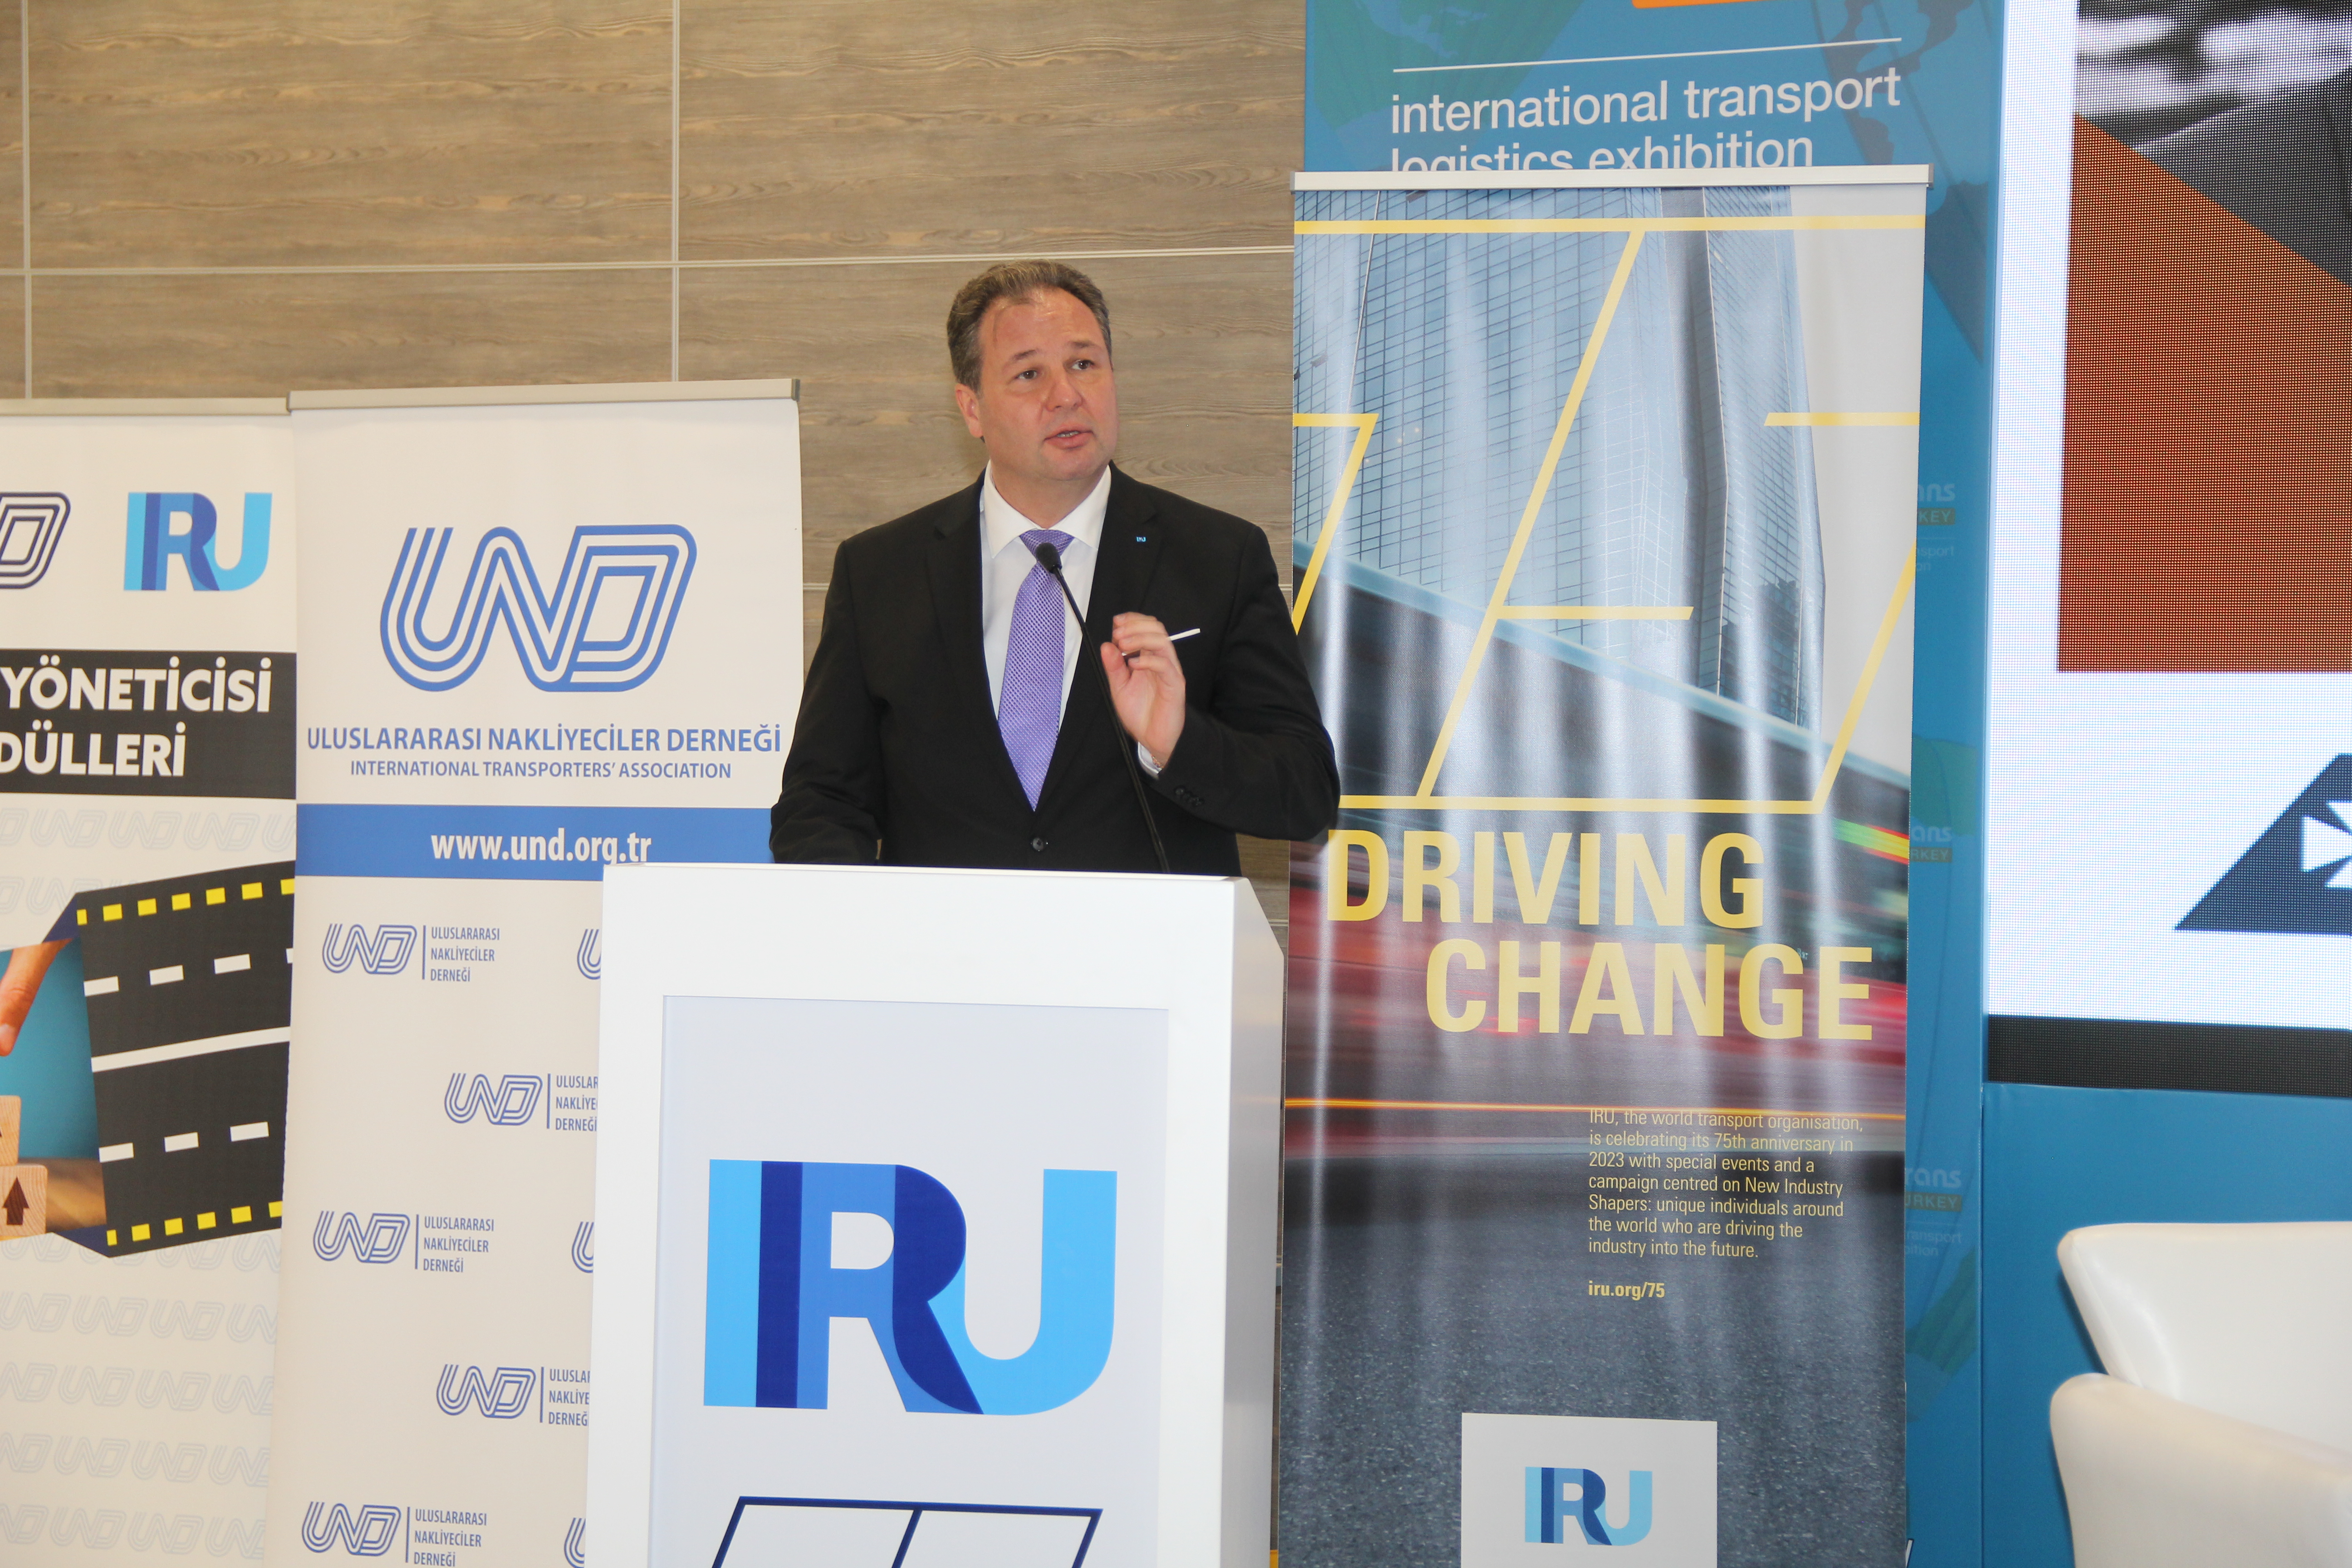 IRU President Radu Dinescu